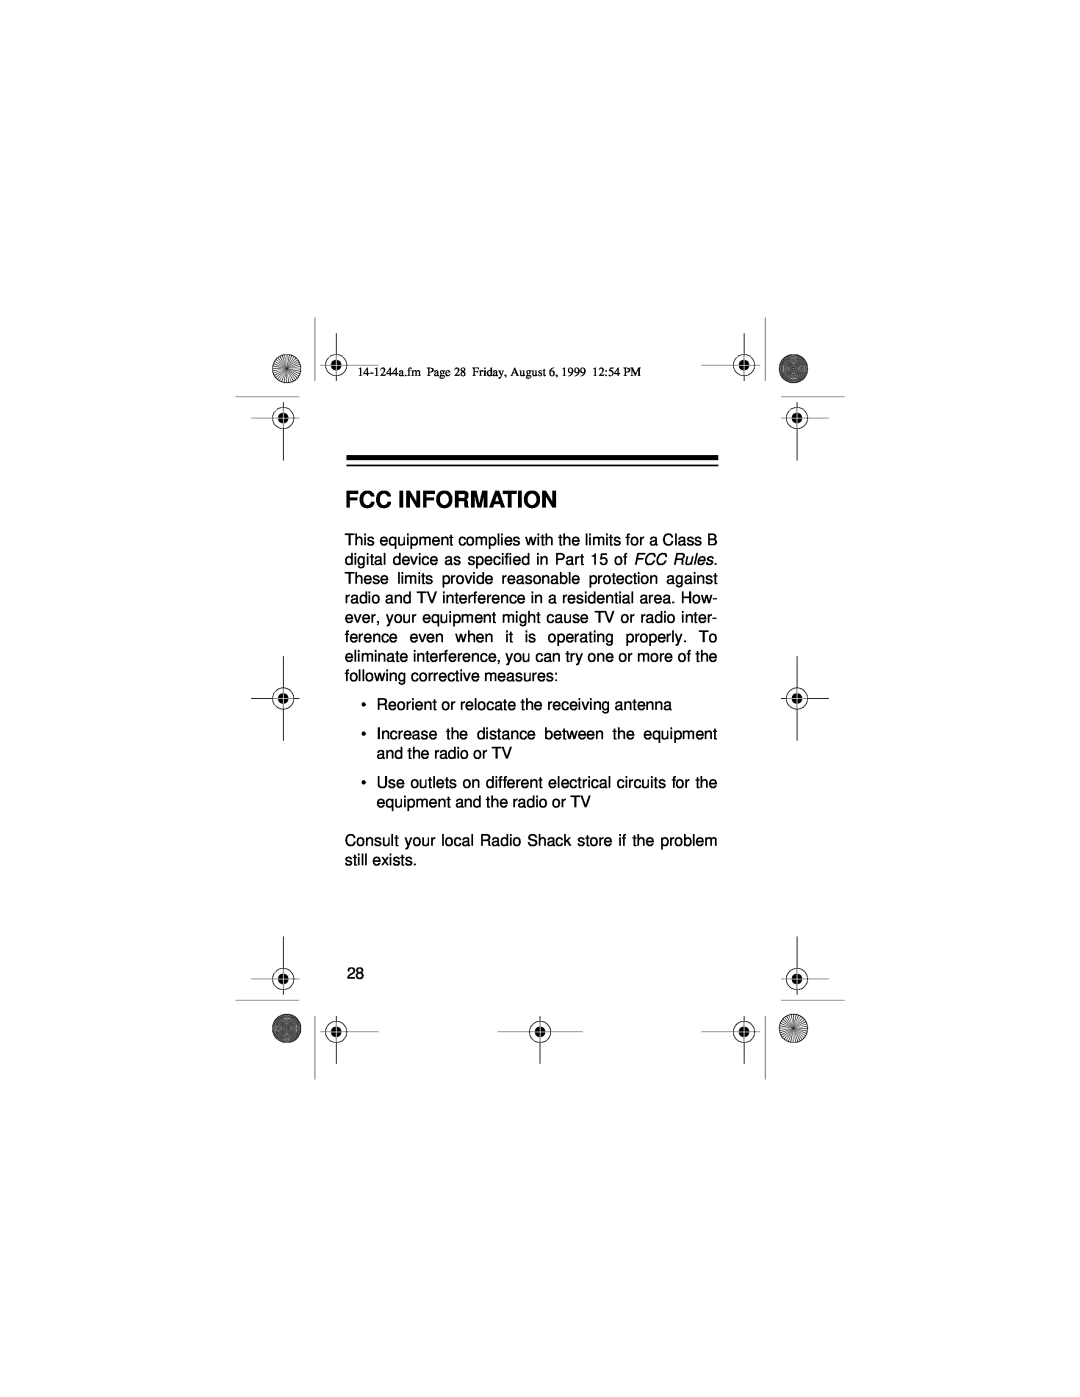 Optimus SCP-97 owner manual Fcc Information 